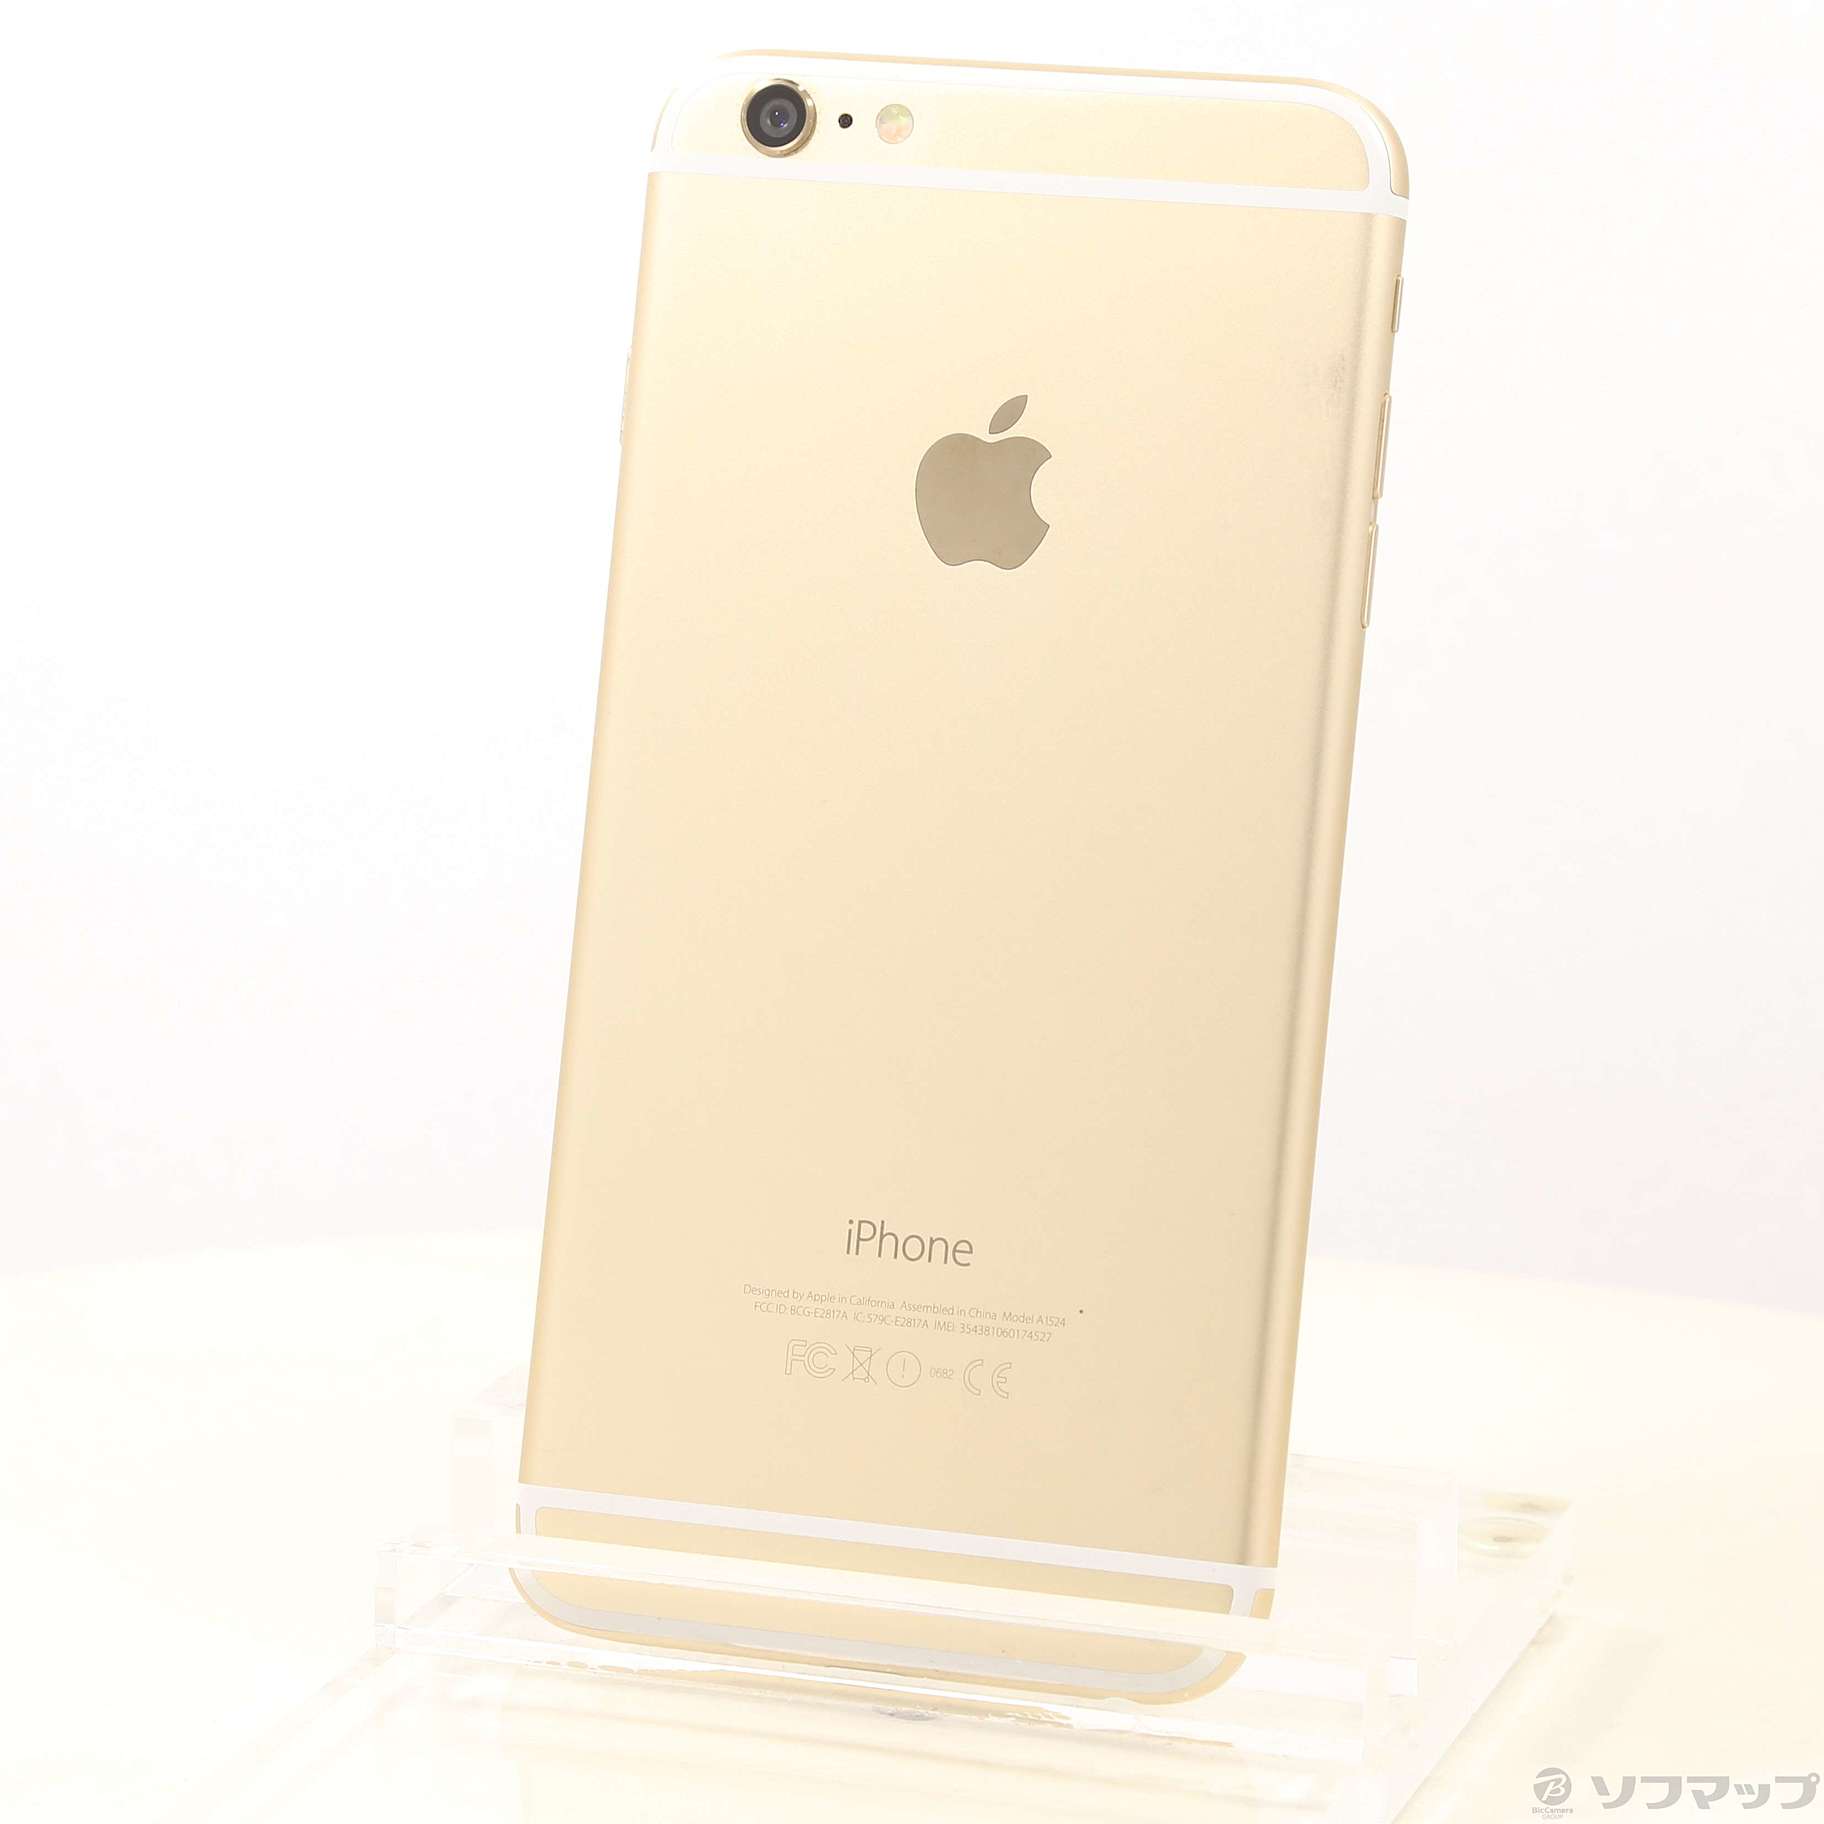 iPhone 6 Plus Gold 128 GB Softbank - スマートフォン本体